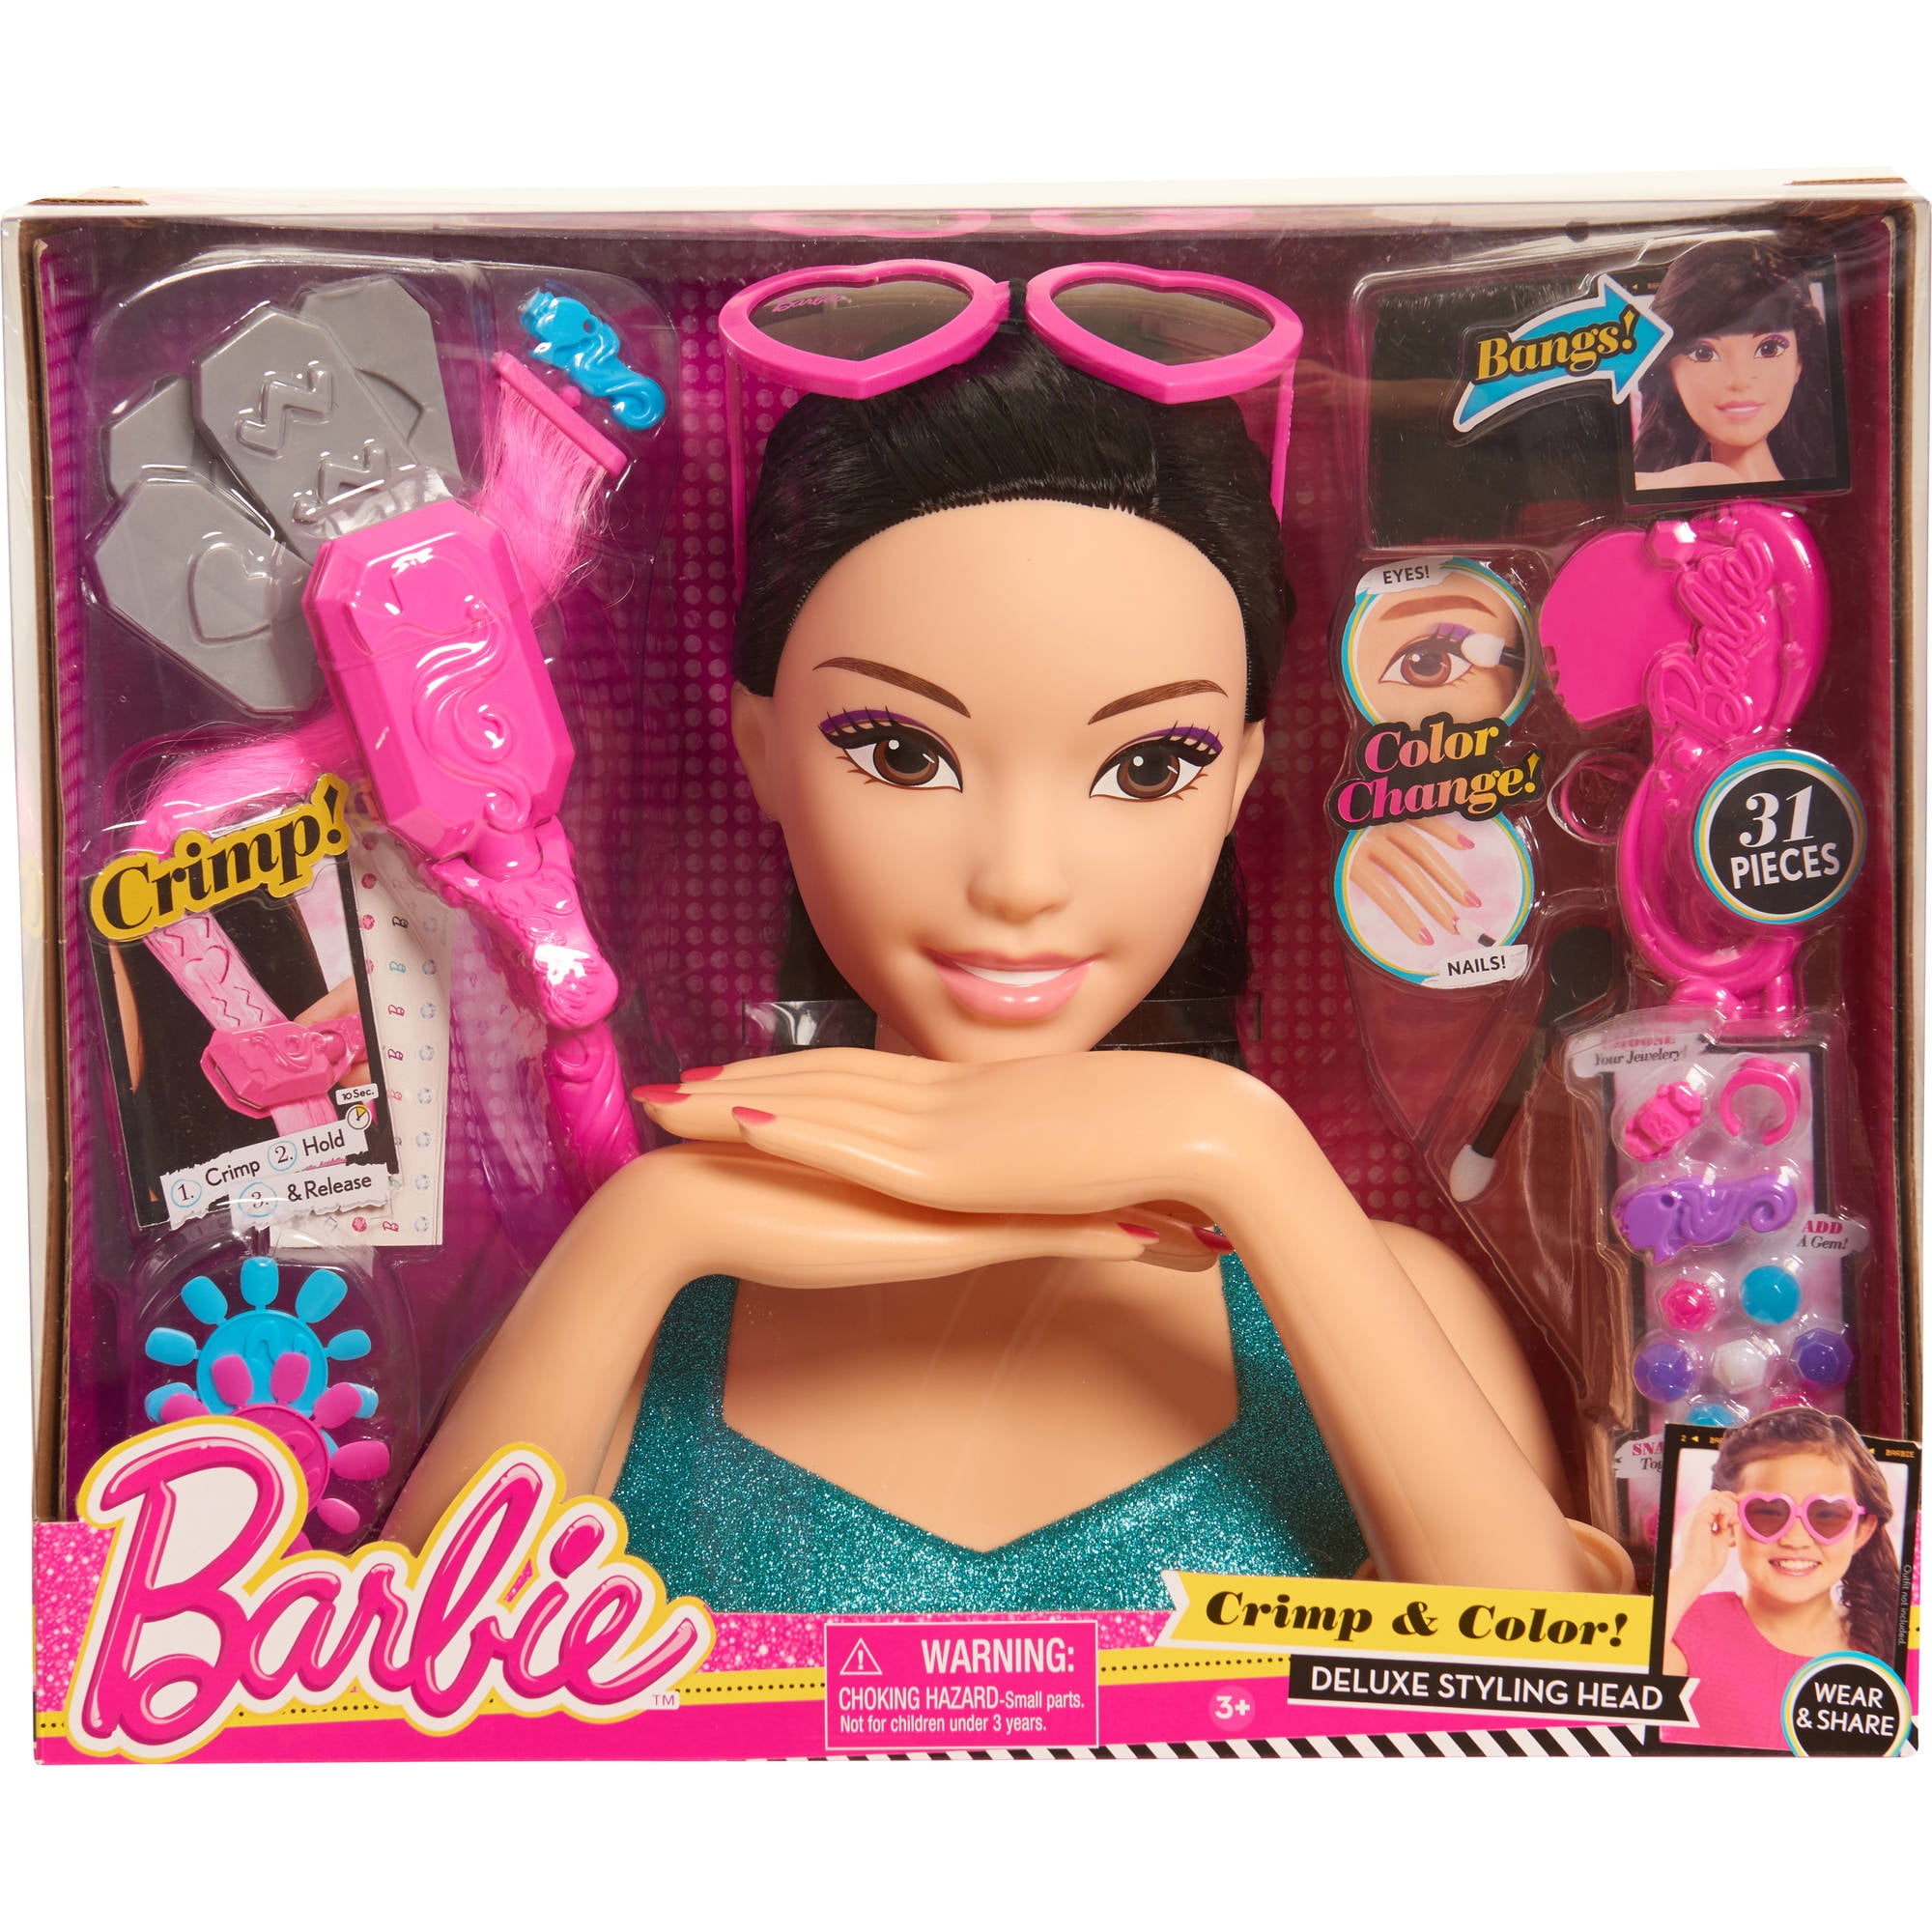 Barbie: barbie head